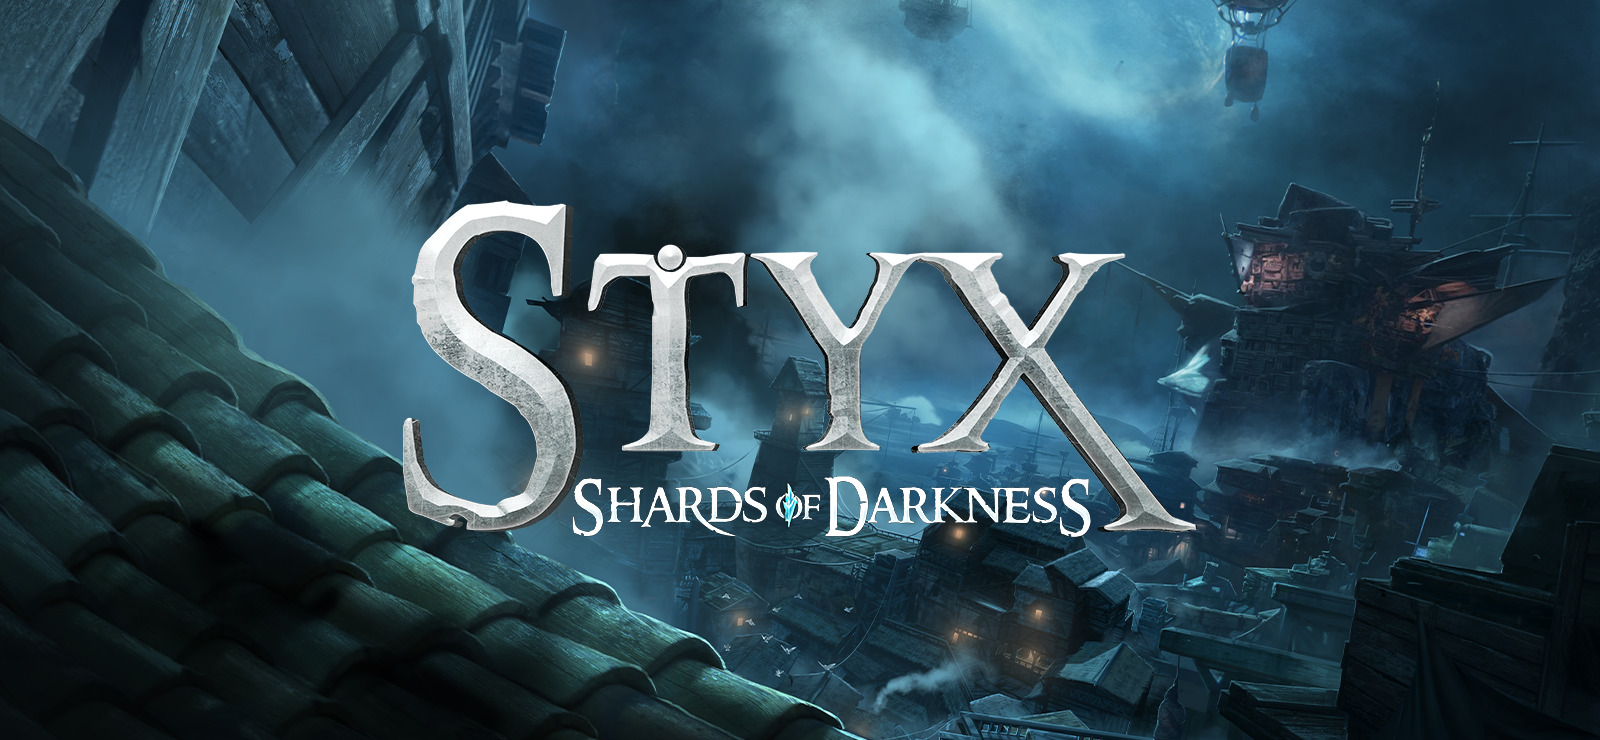 styx shards of darkness download